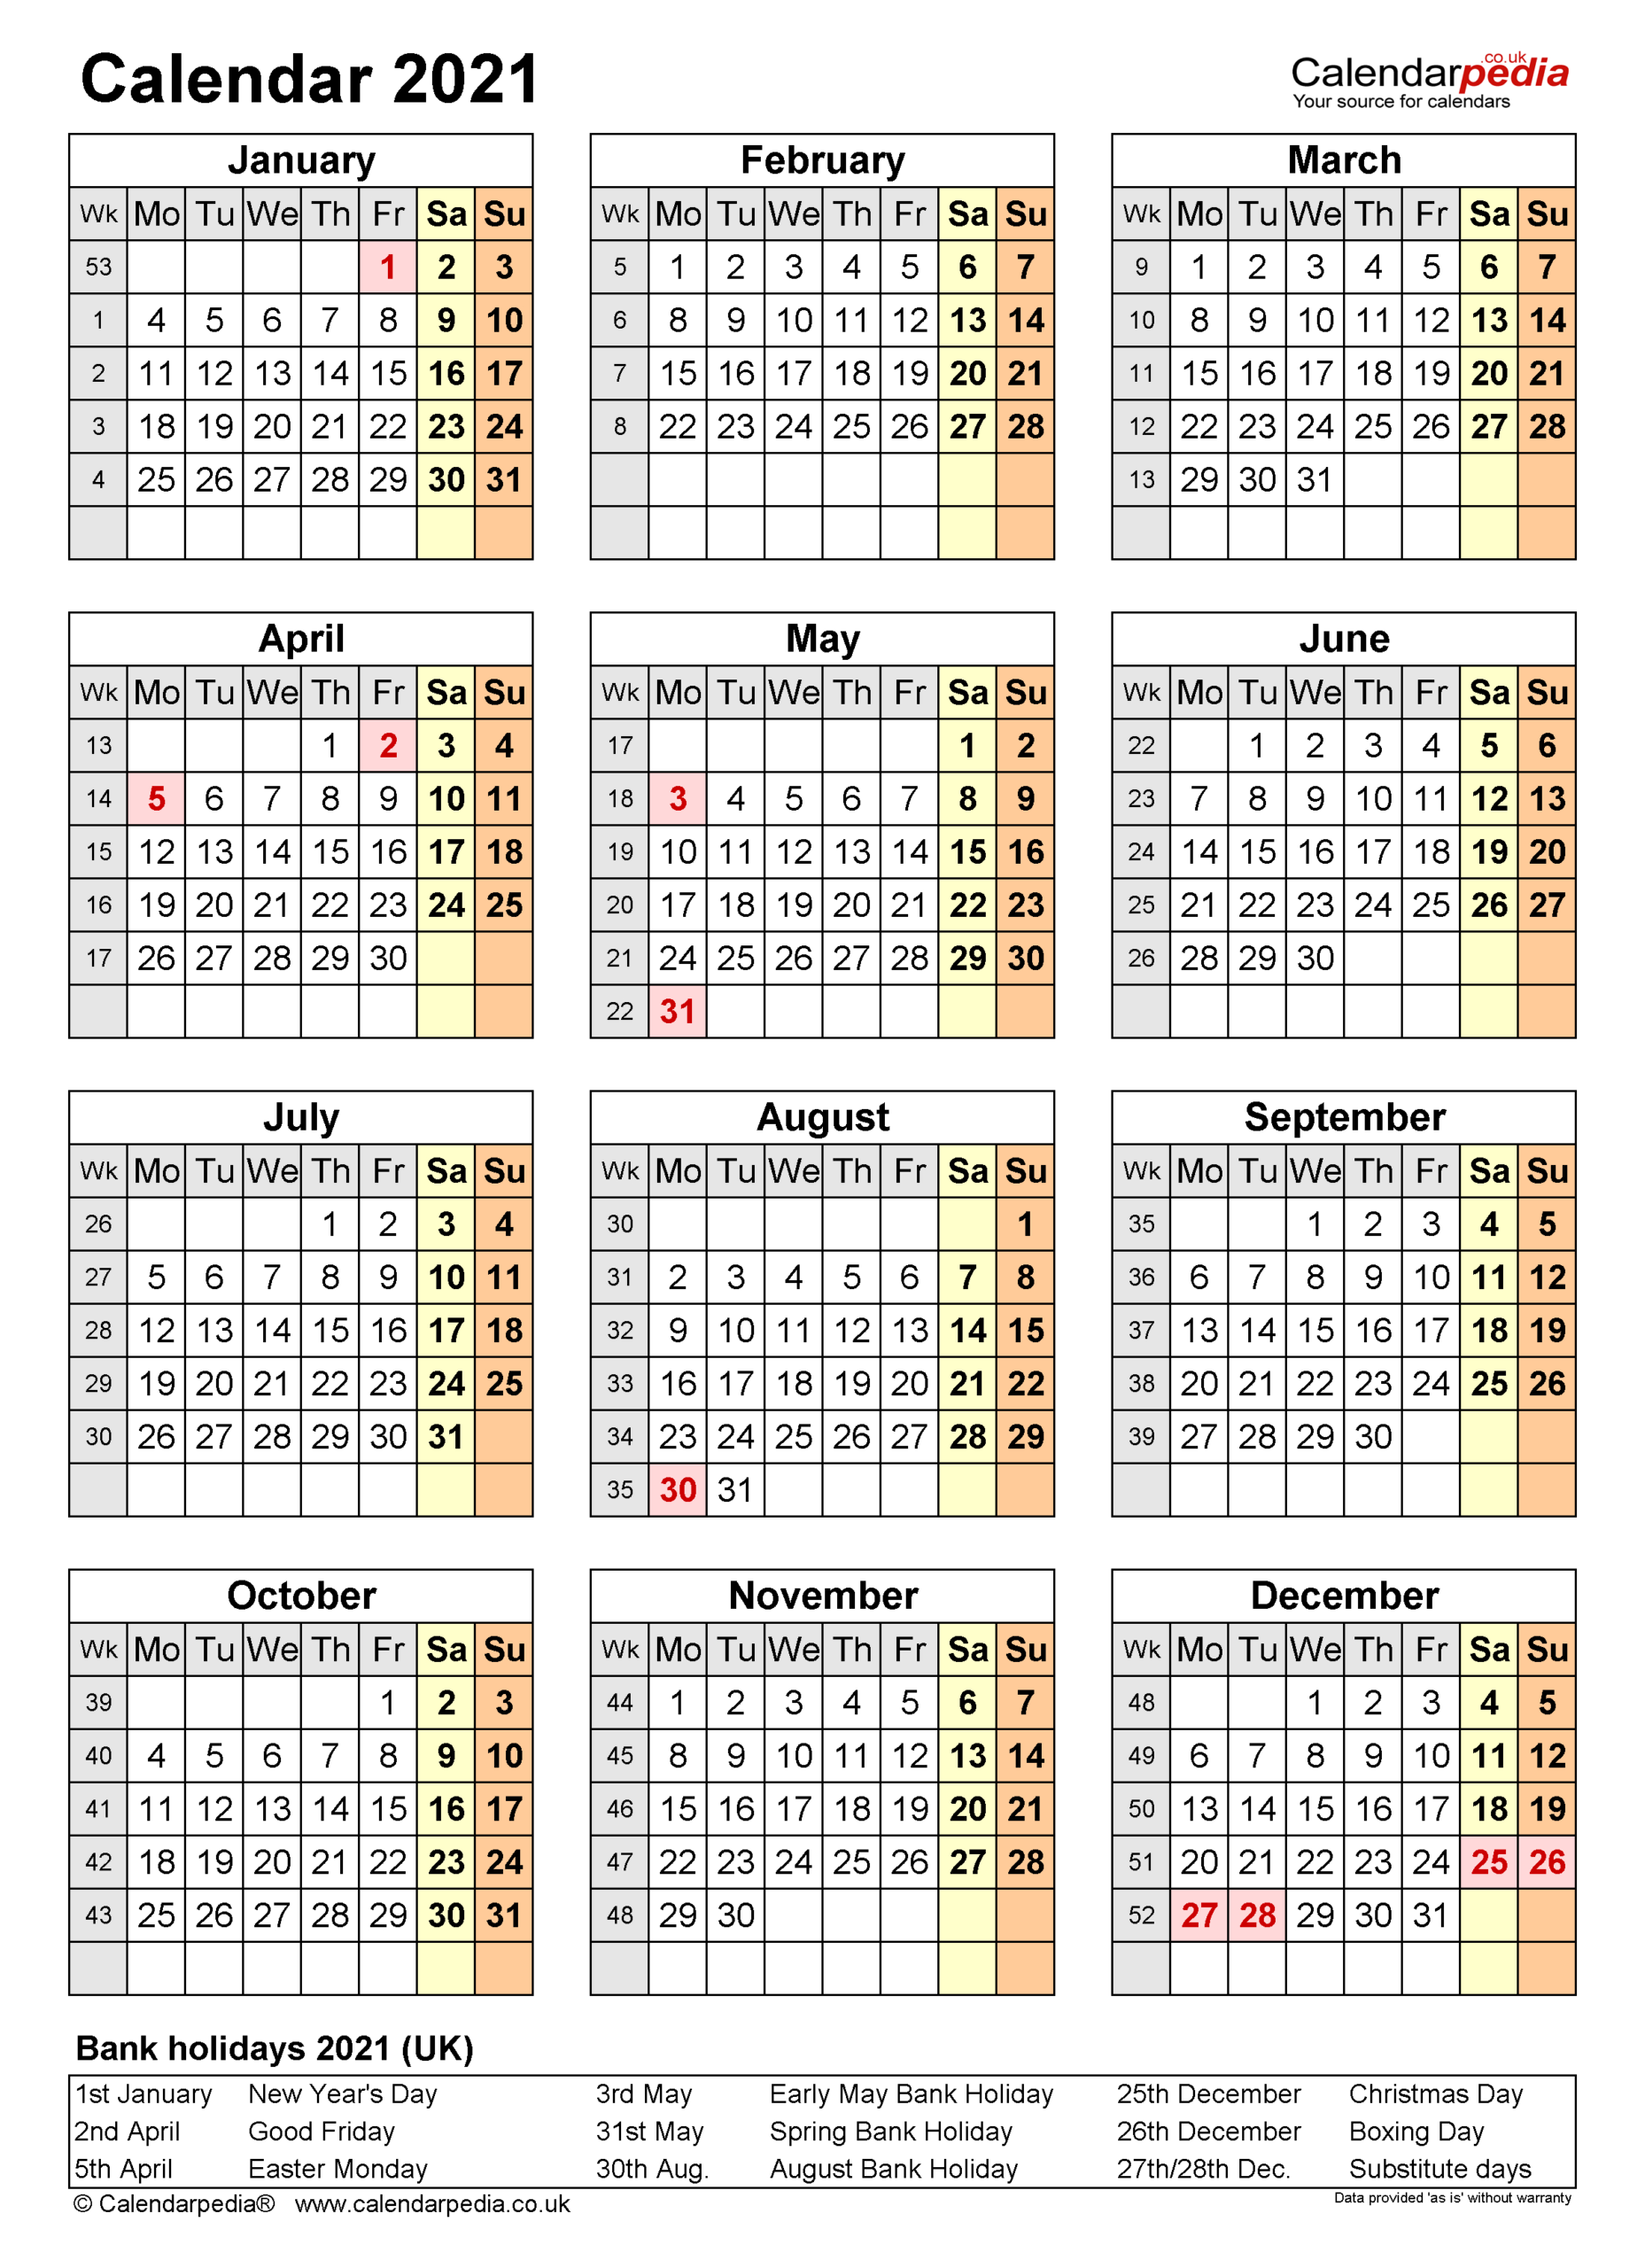 Calendar 2021 (Uk) - Free Printable Microsoft Excel Templates